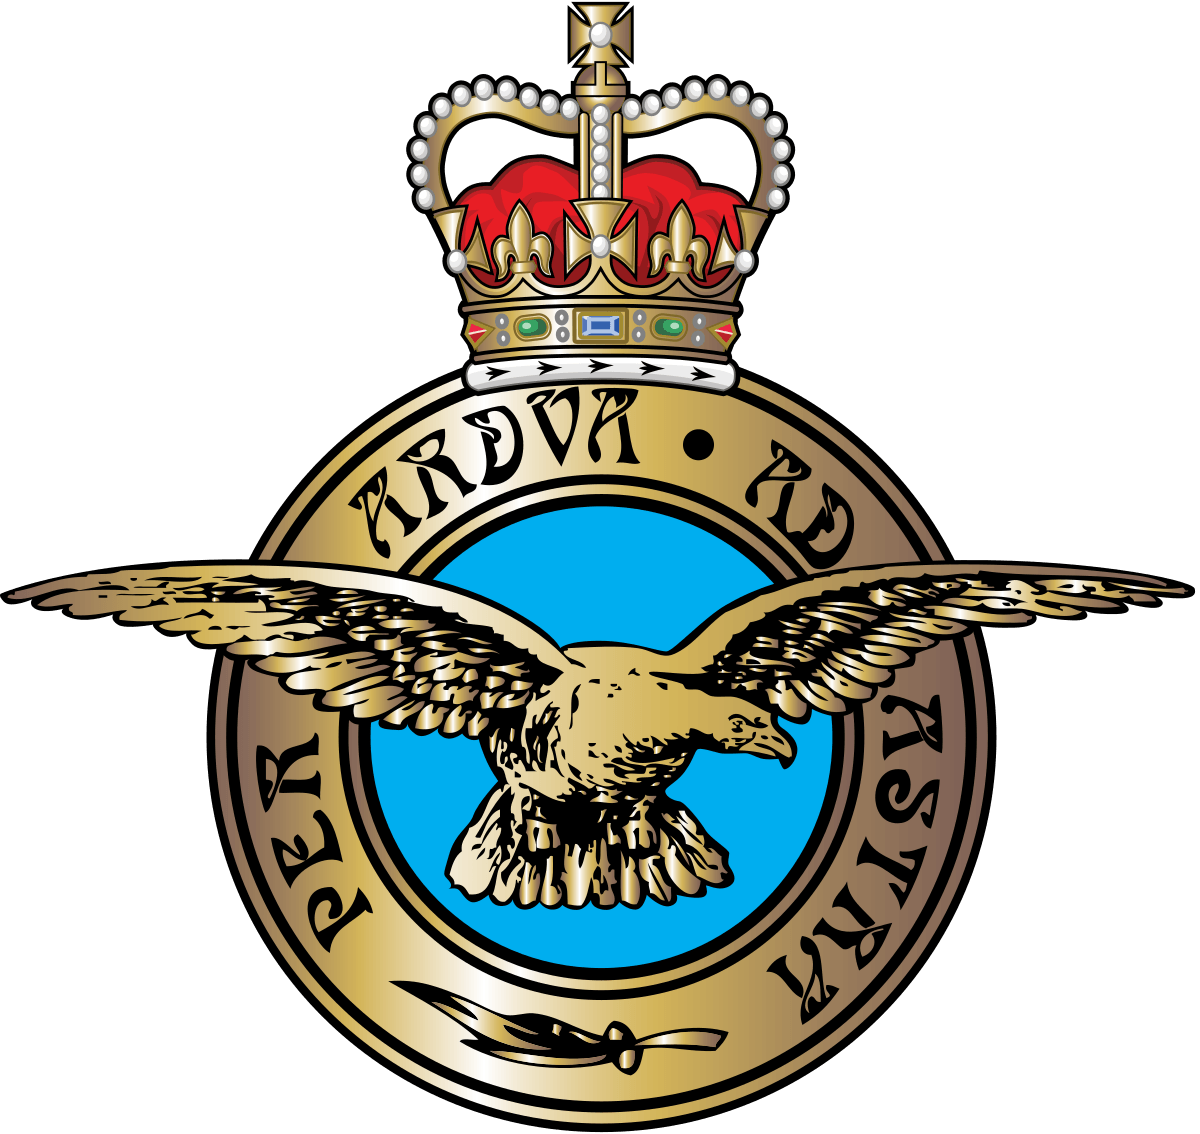 U.S. Army Air Force Logo - Royal Air Force